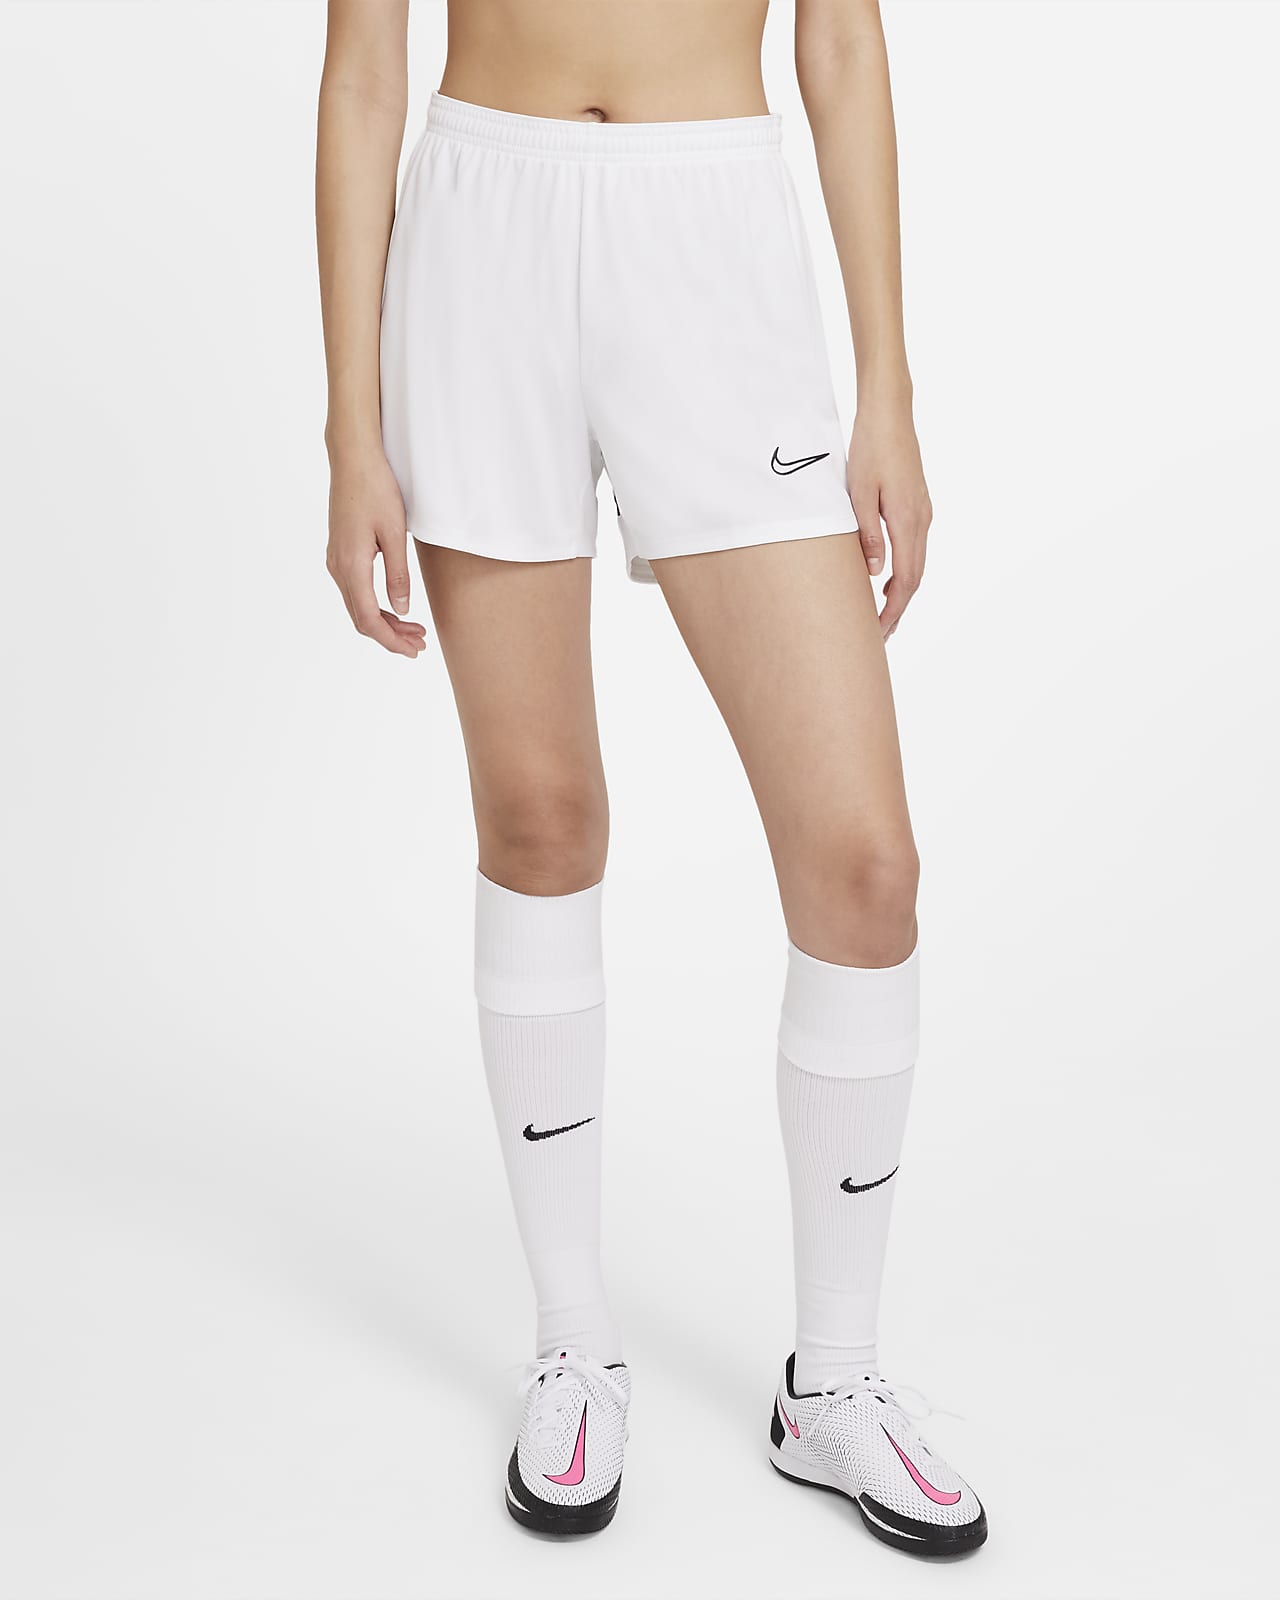 nike womens soccer shorts dri fit